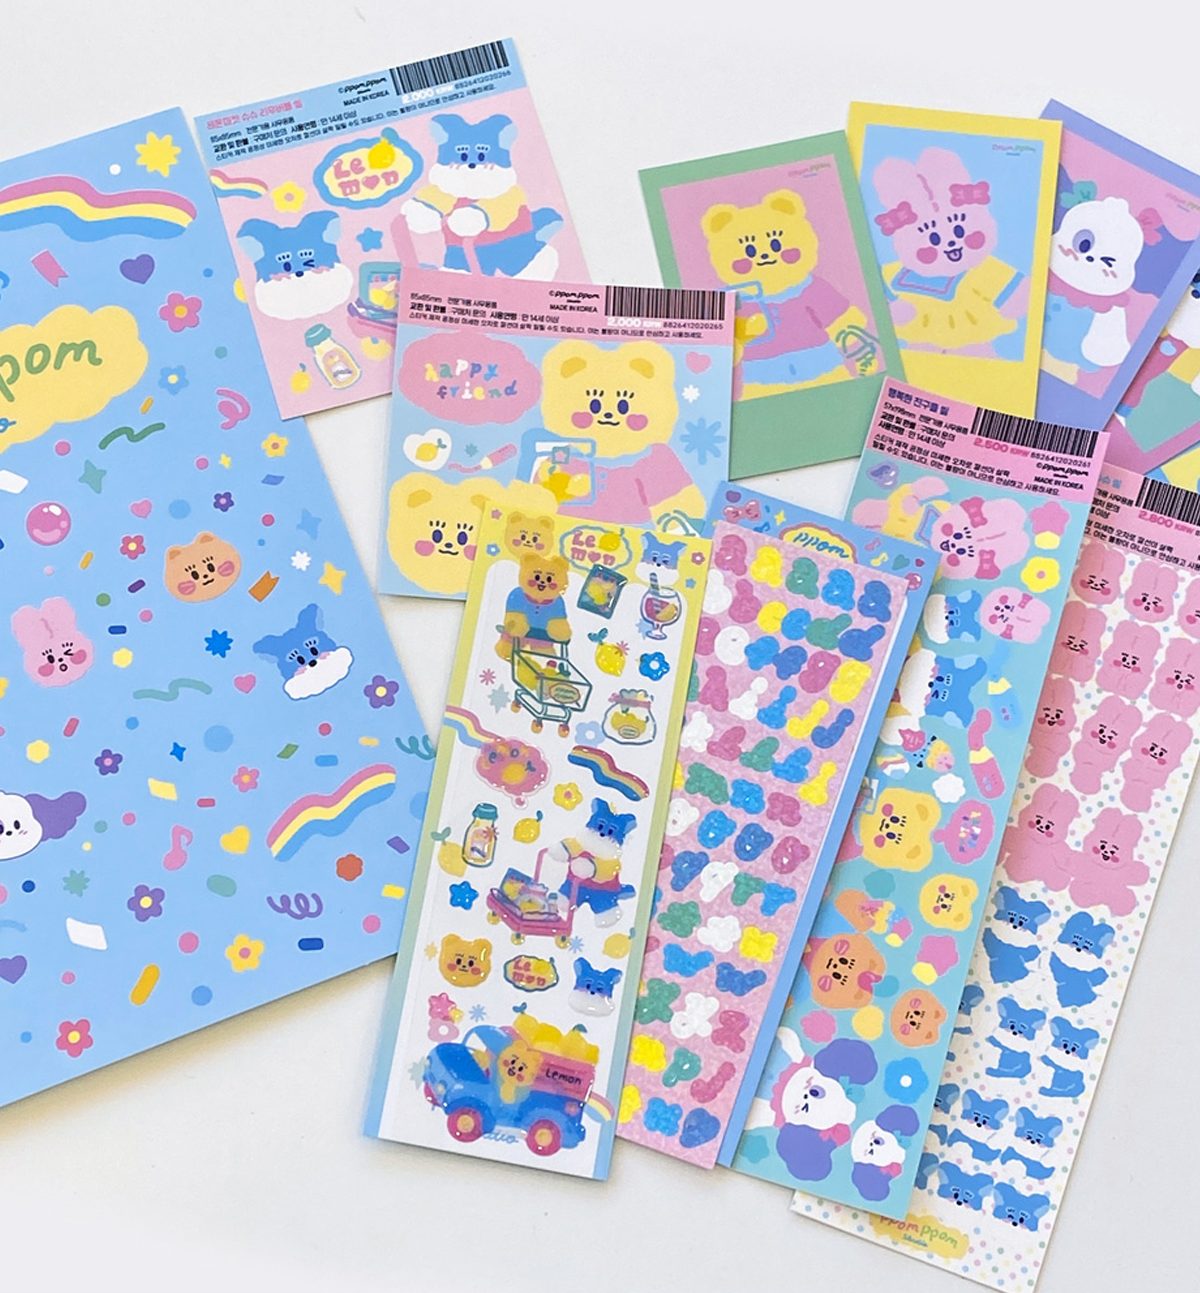 Color Pop Paper File & Sticker Pack [11 Items]